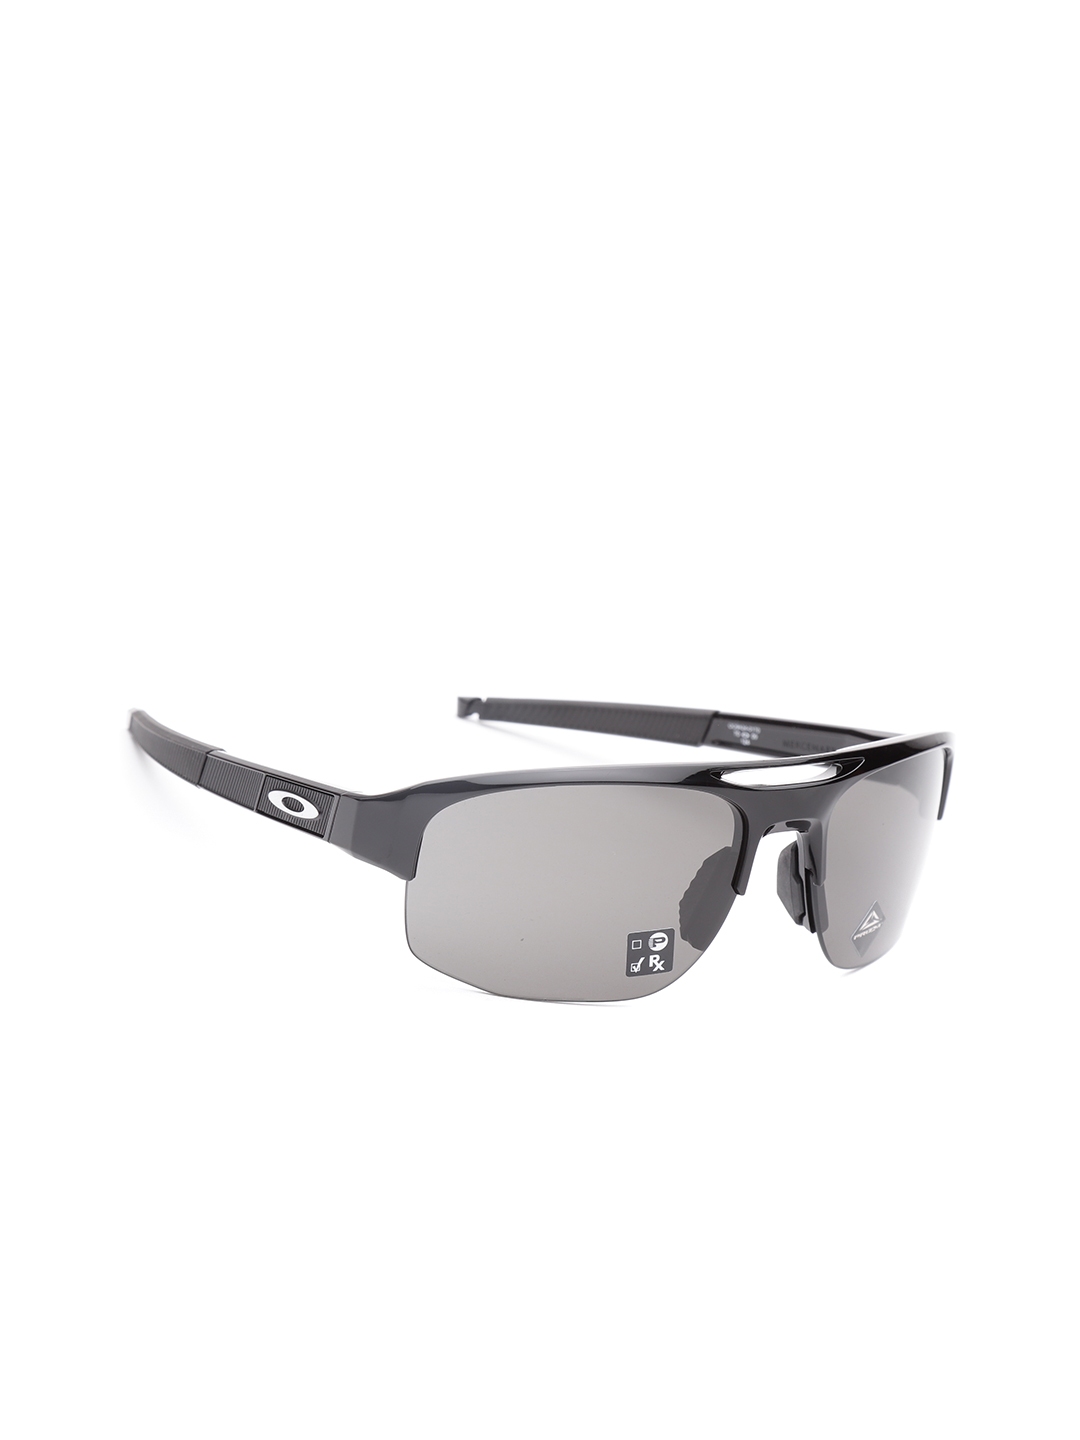 Buy OAKLEY Men Half Rim Sports Sunglasses 0OO9424942401 - Sunglasses ...